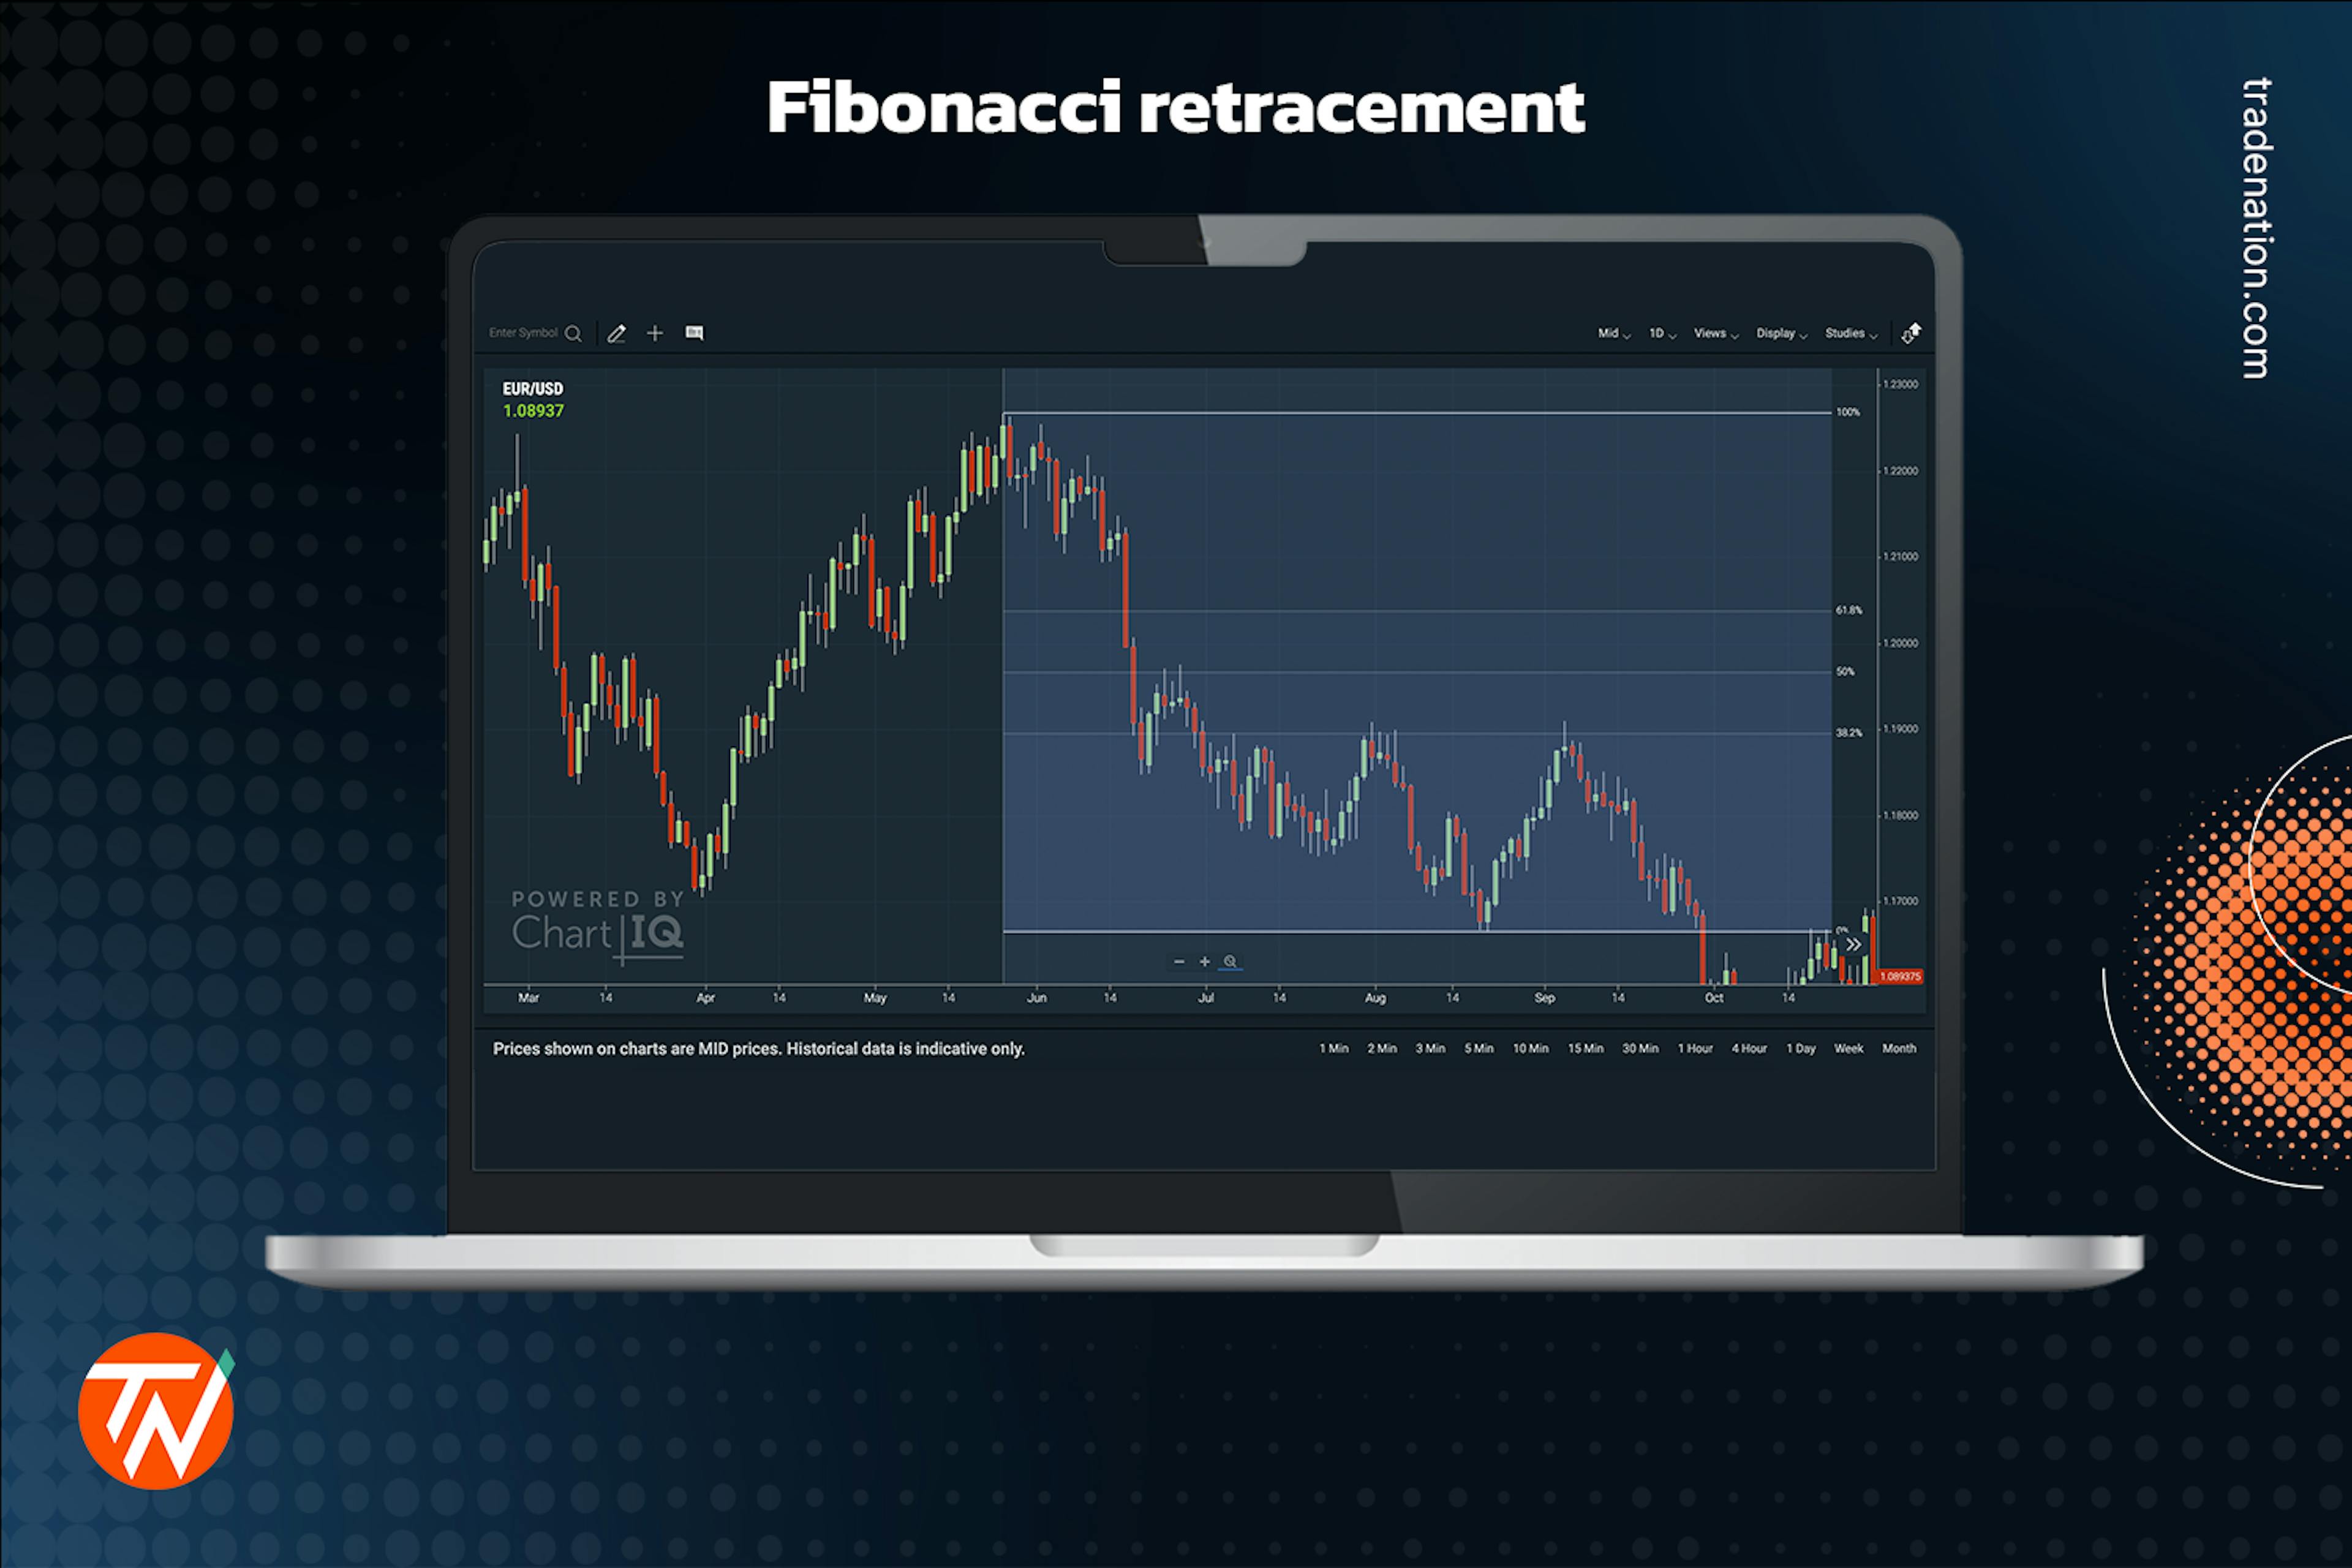 Fibonacci retracement in trading demonstrated